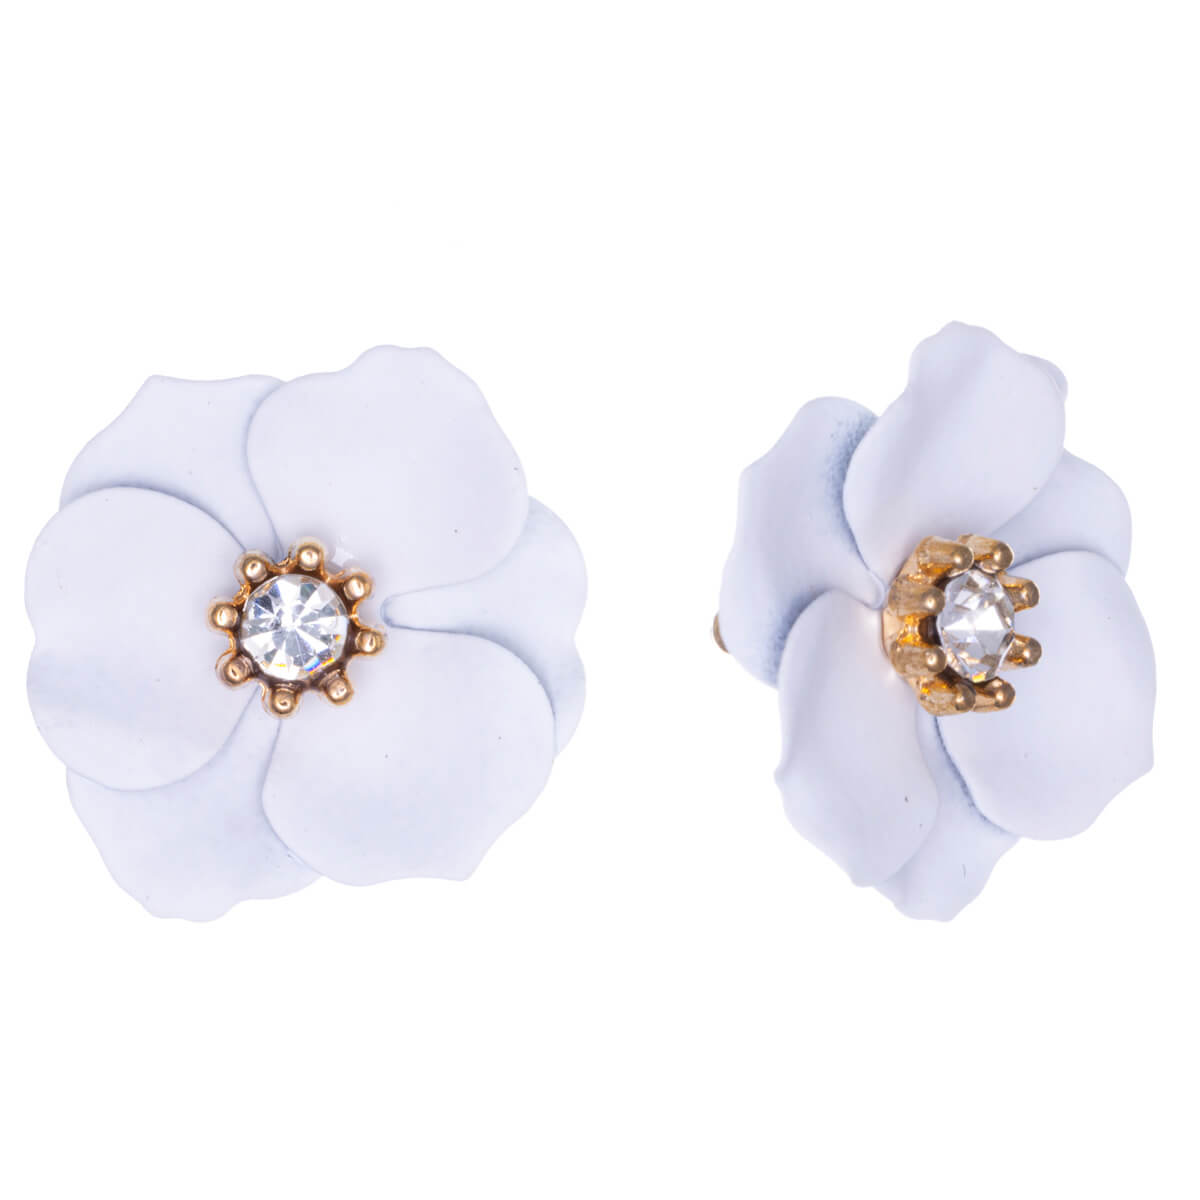 Flower earrings with stone